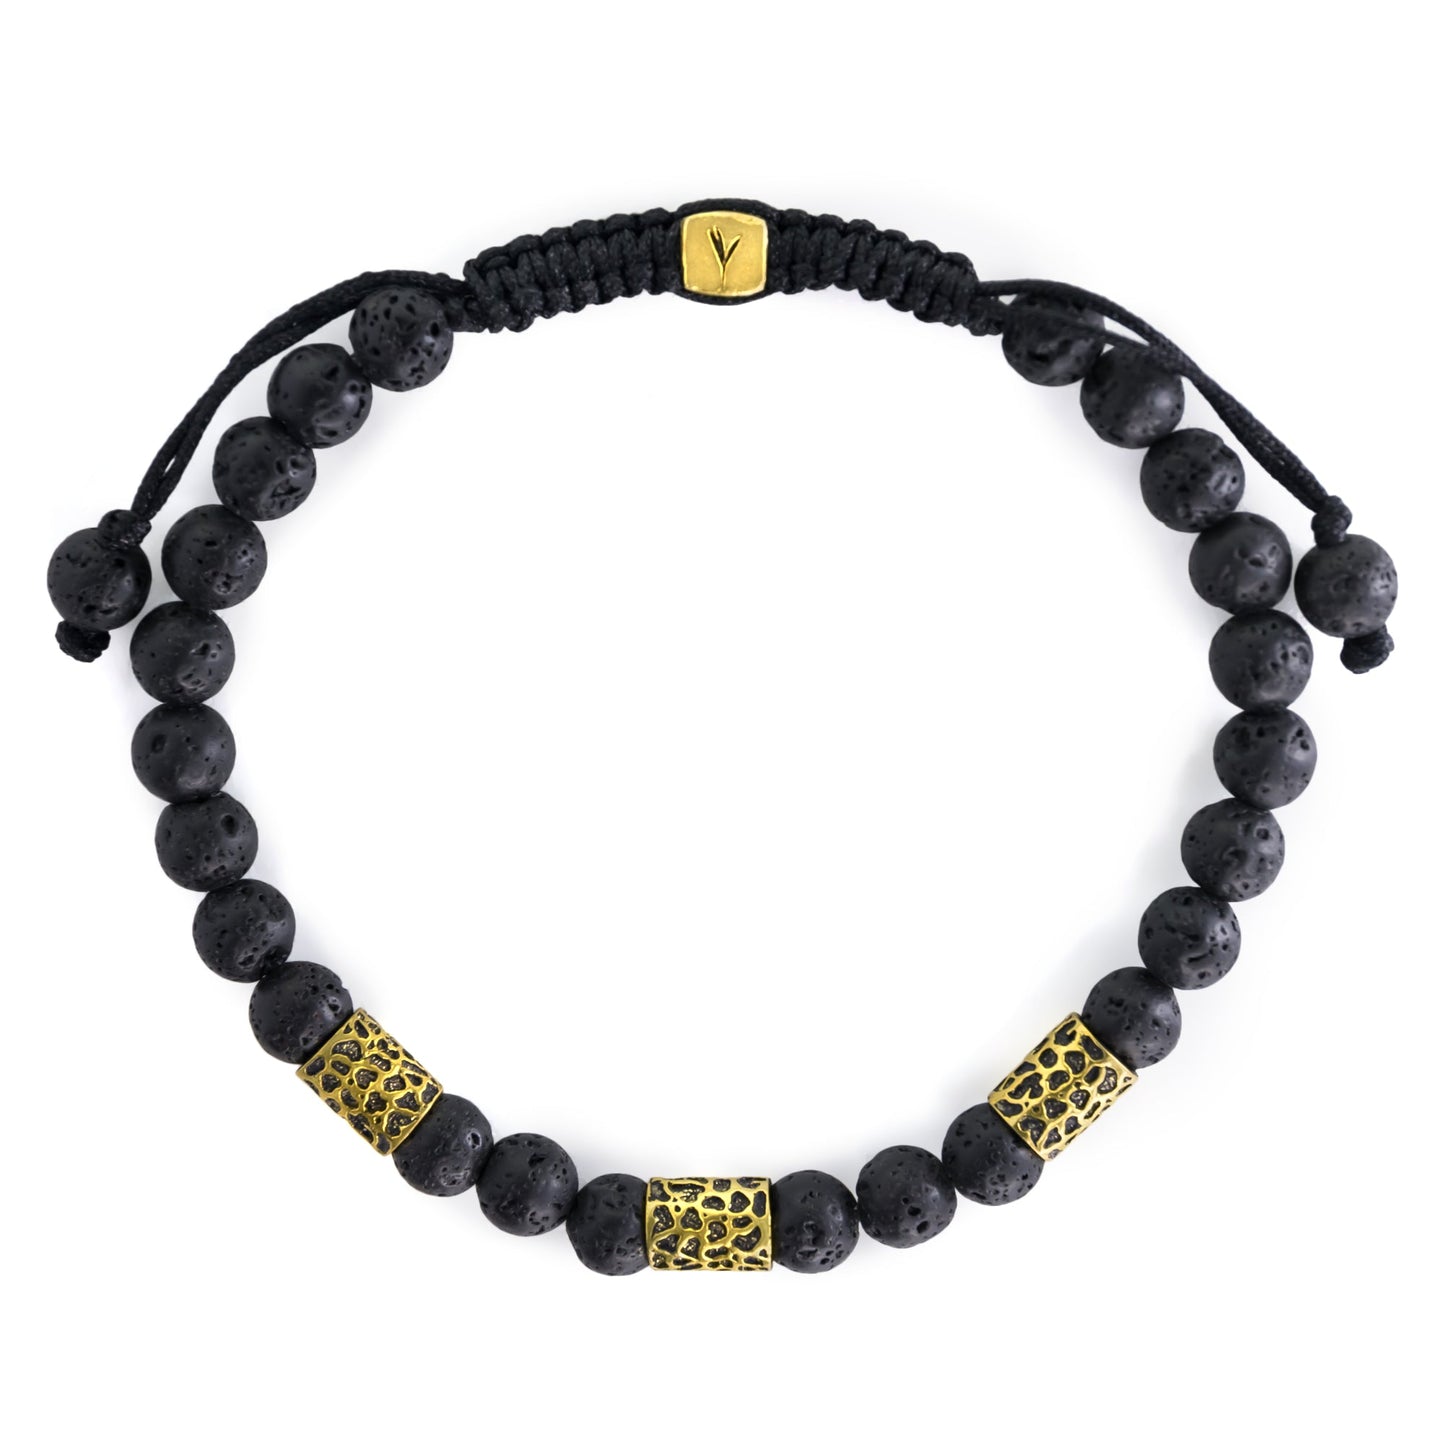 Leopard Lava Stone Adjustable Bracelet (Strength and Confidence)